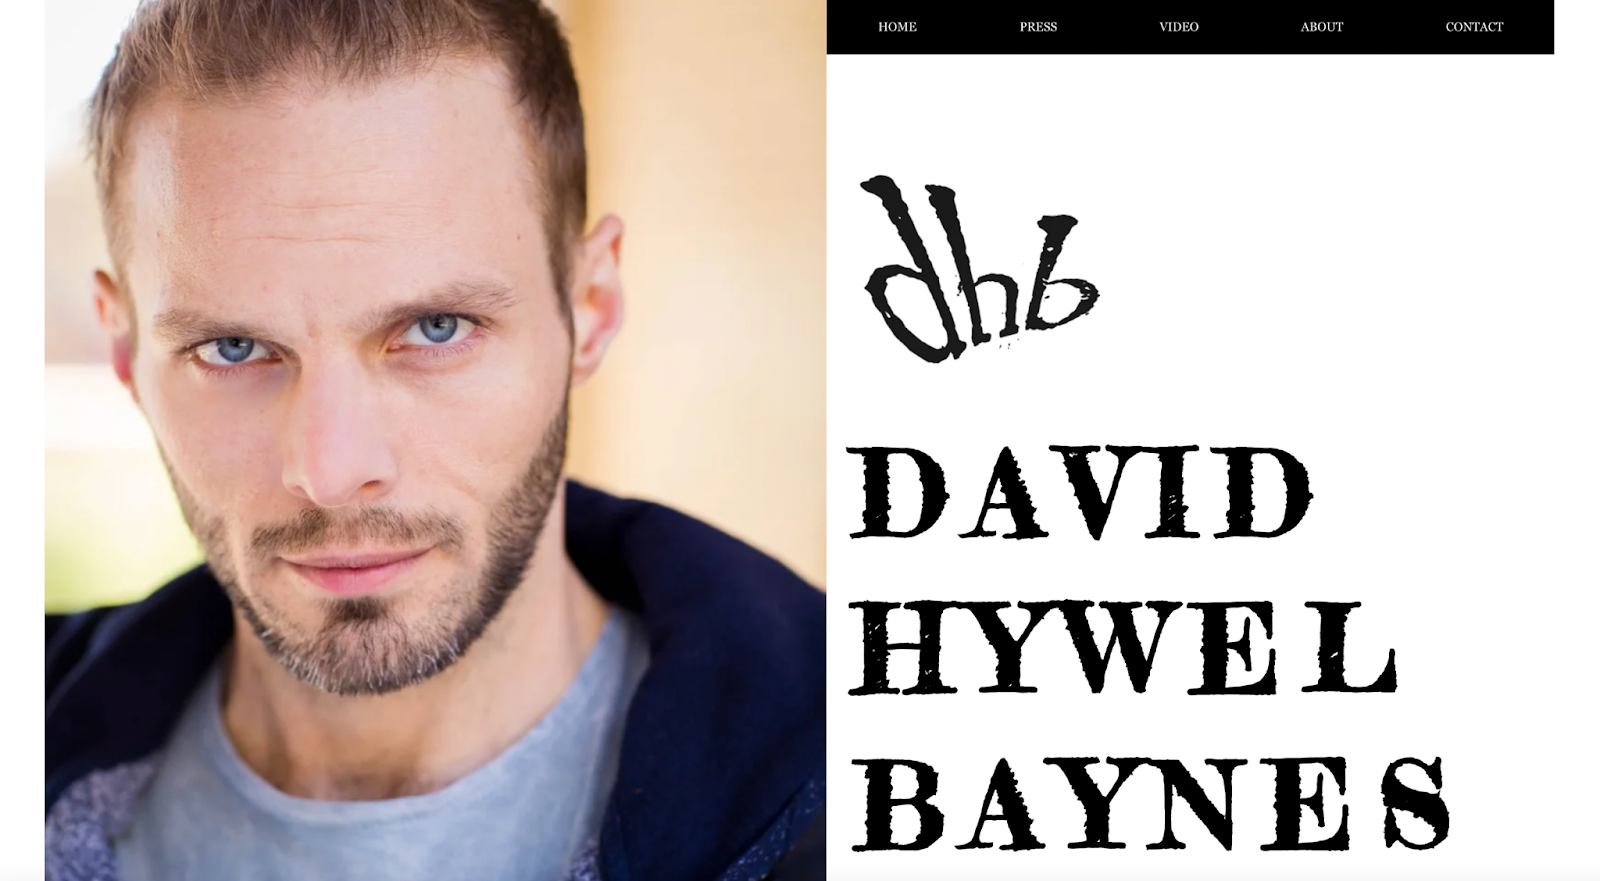 David Hywel Baynes